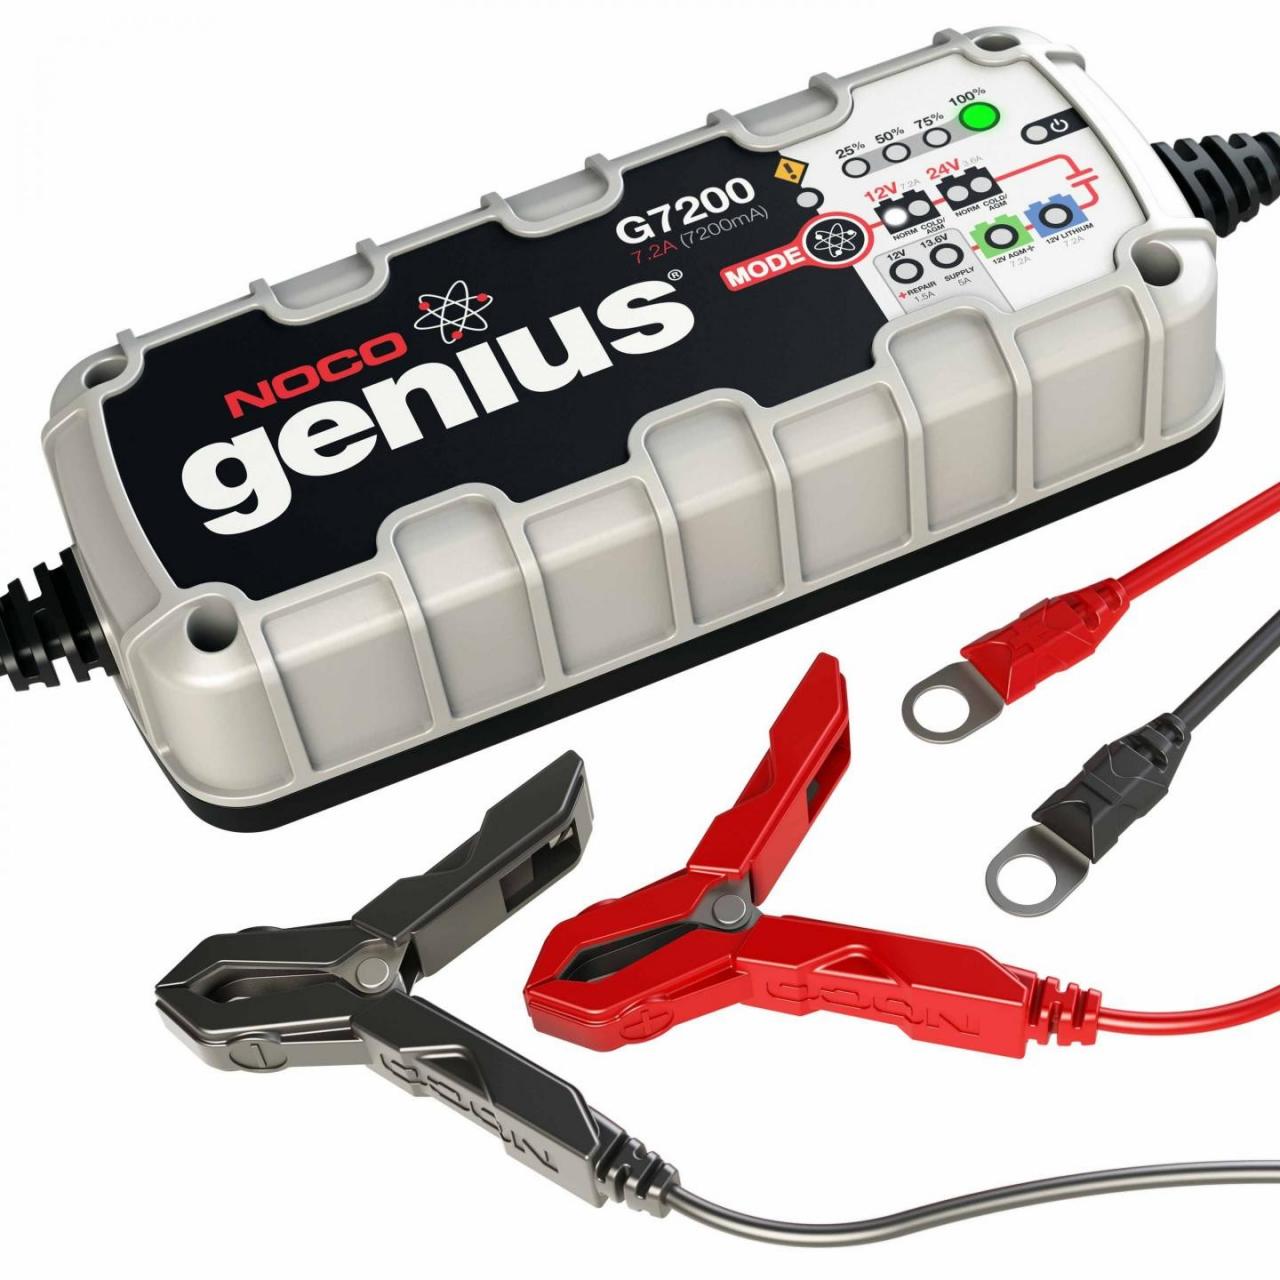 NOCO Genius G7200 UltraSafe Smart Car Battery Charger | Geartek